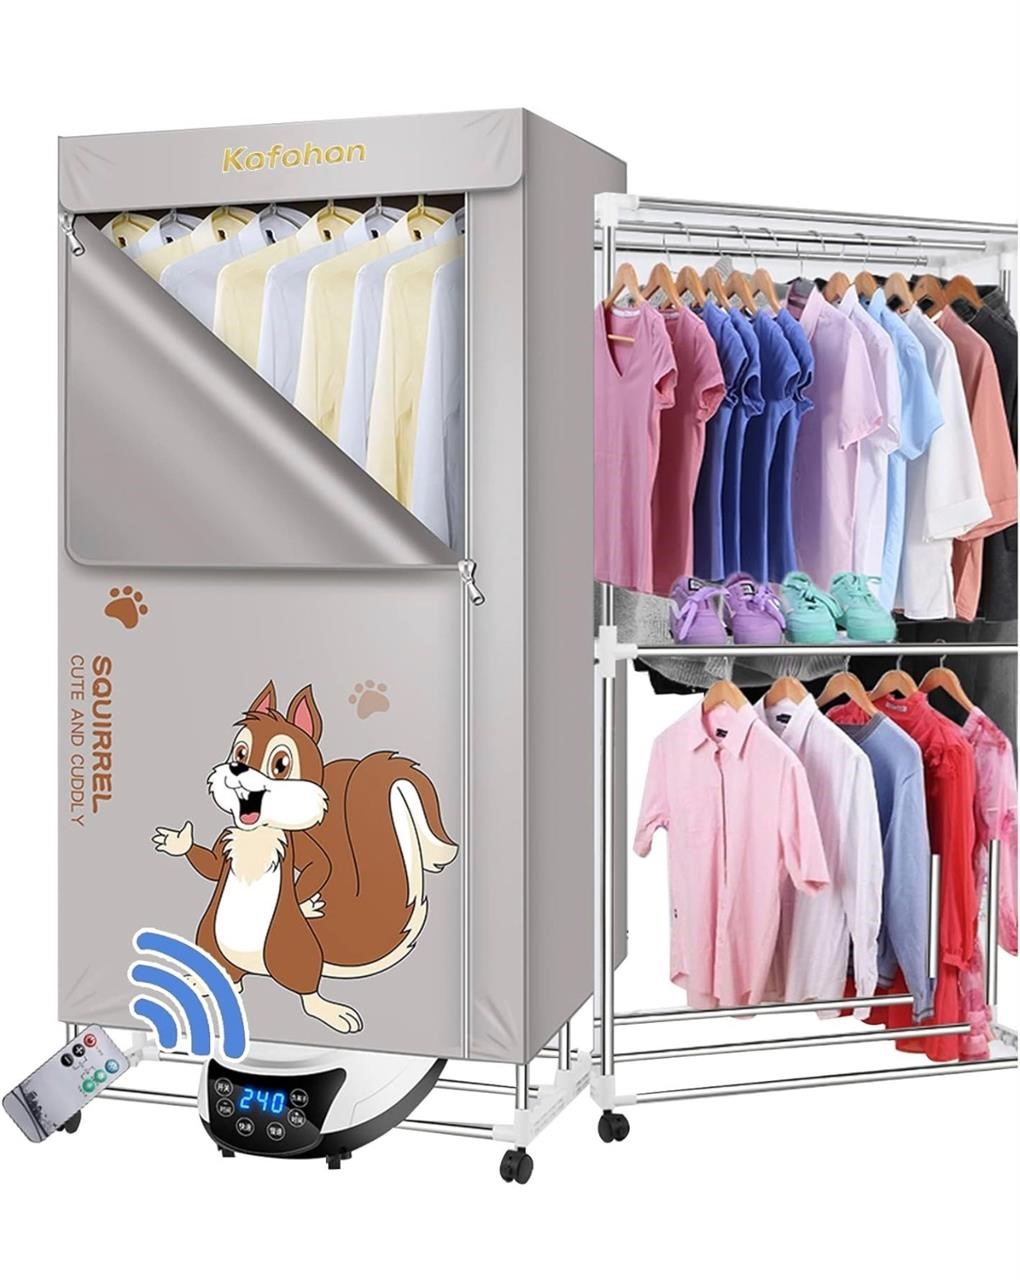 $102 (1.6M) Foldable Clothes Dryer